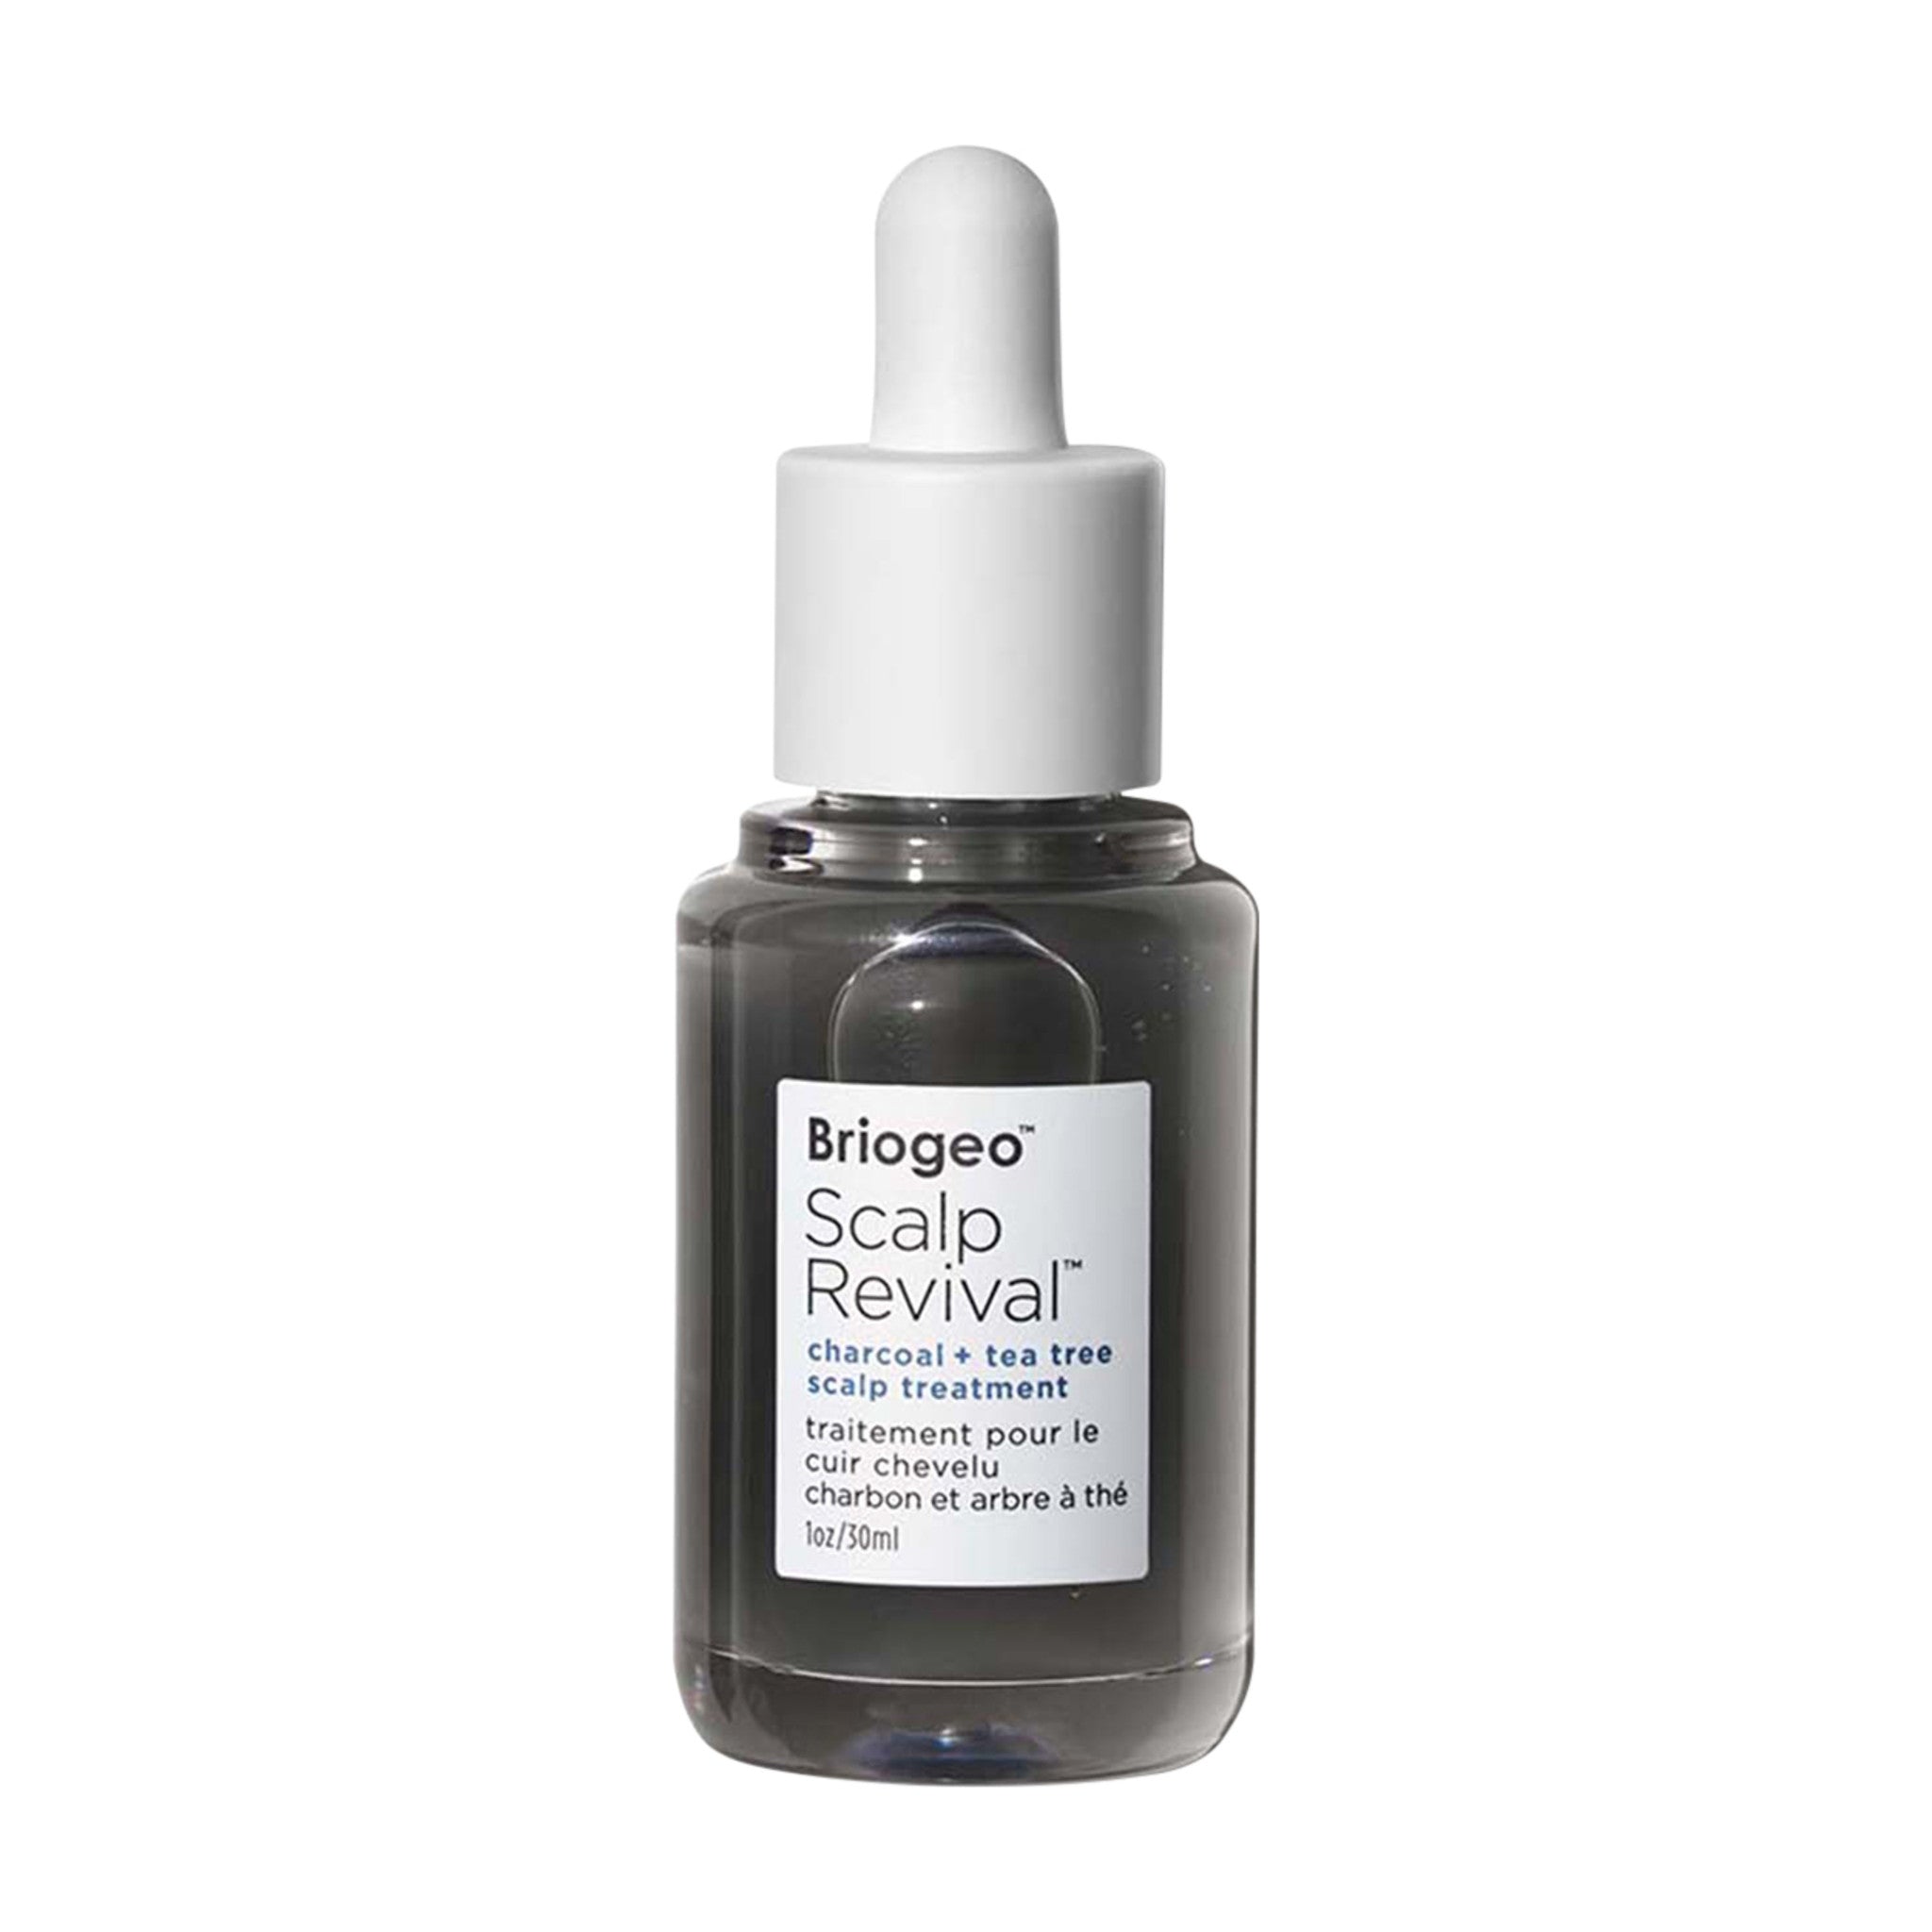 Briogeo Scalp Revival Charcoal and Tea Tree Scalp Treatment Serum main image.